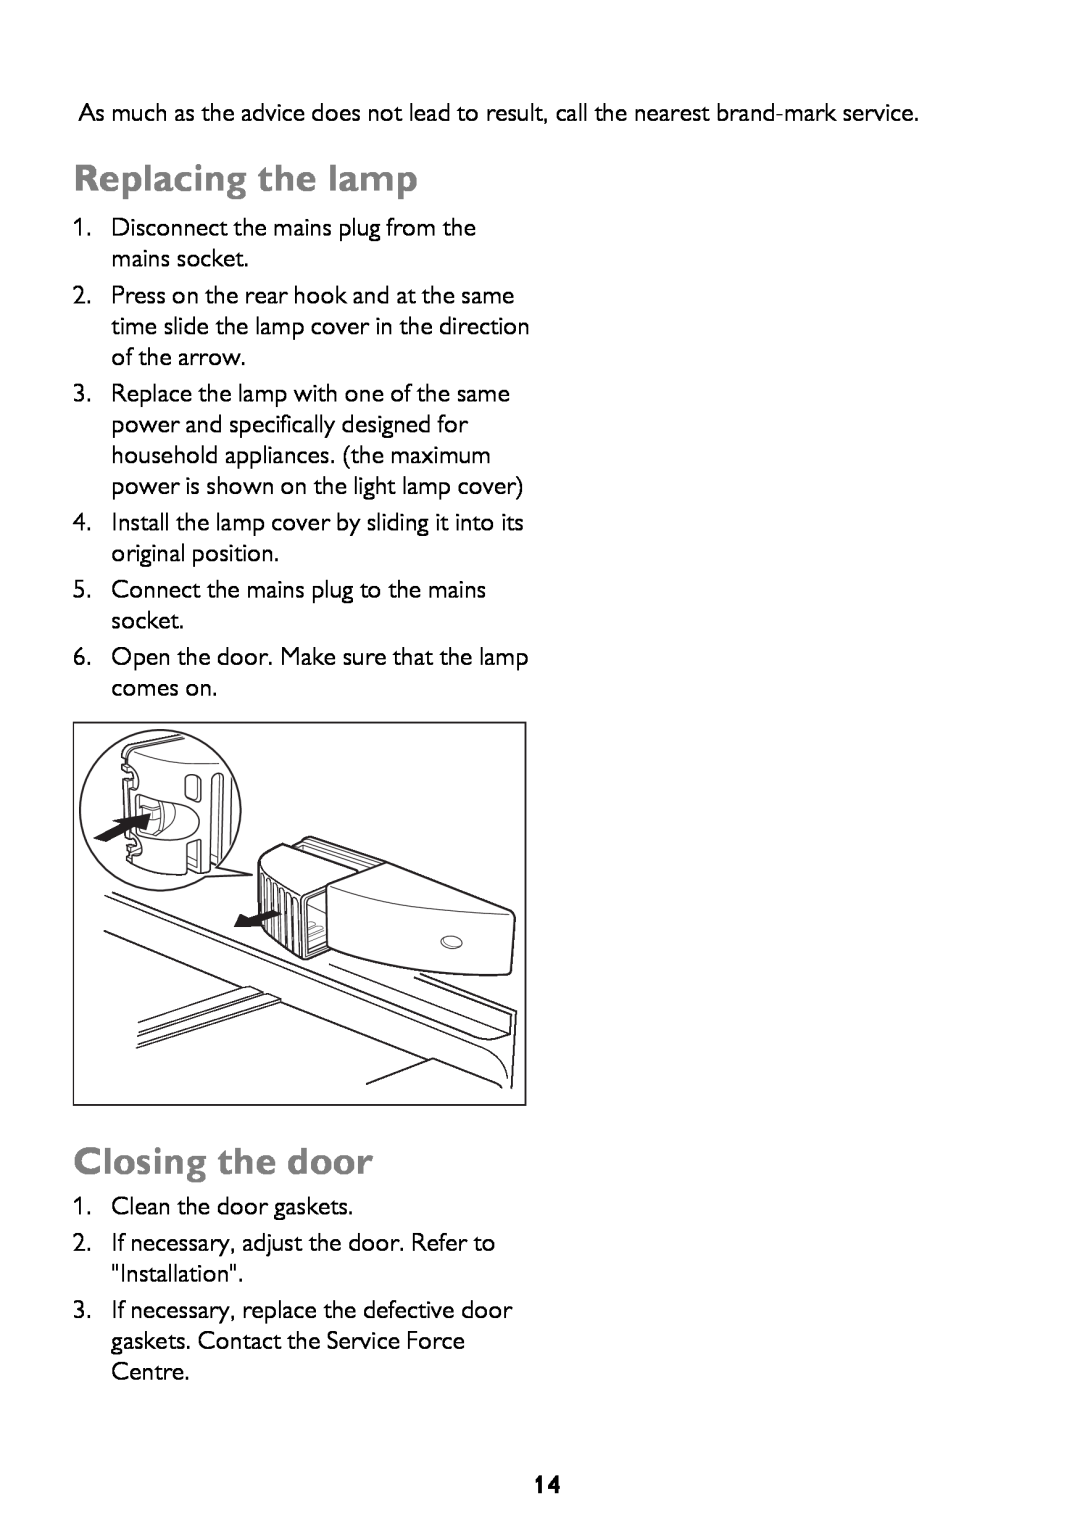 John Lewis JLLFW1602 instruction manual Replacing the lamp, Closing the door 